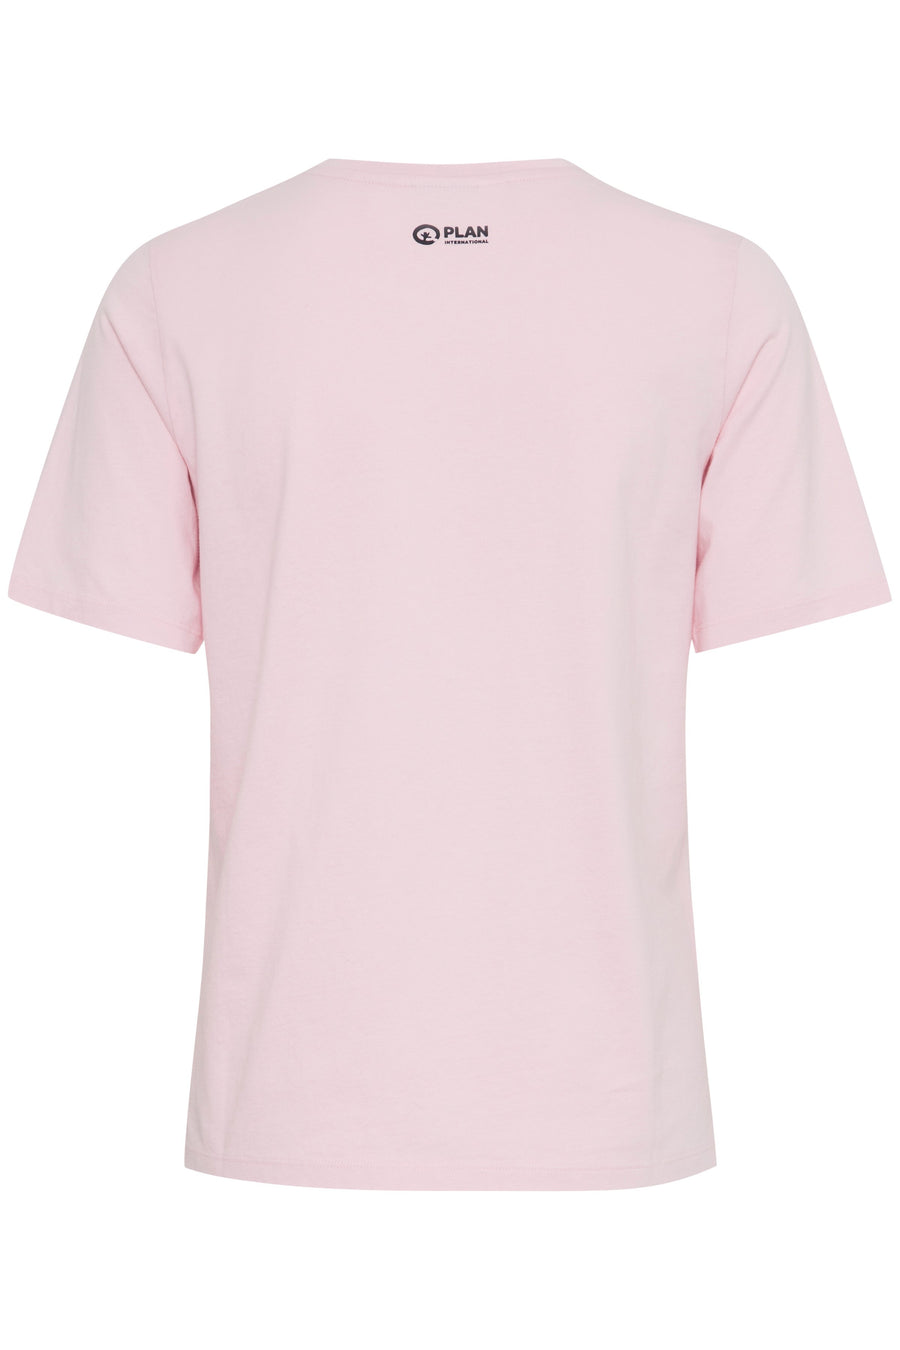 International Women's Day T-shirt in Pink